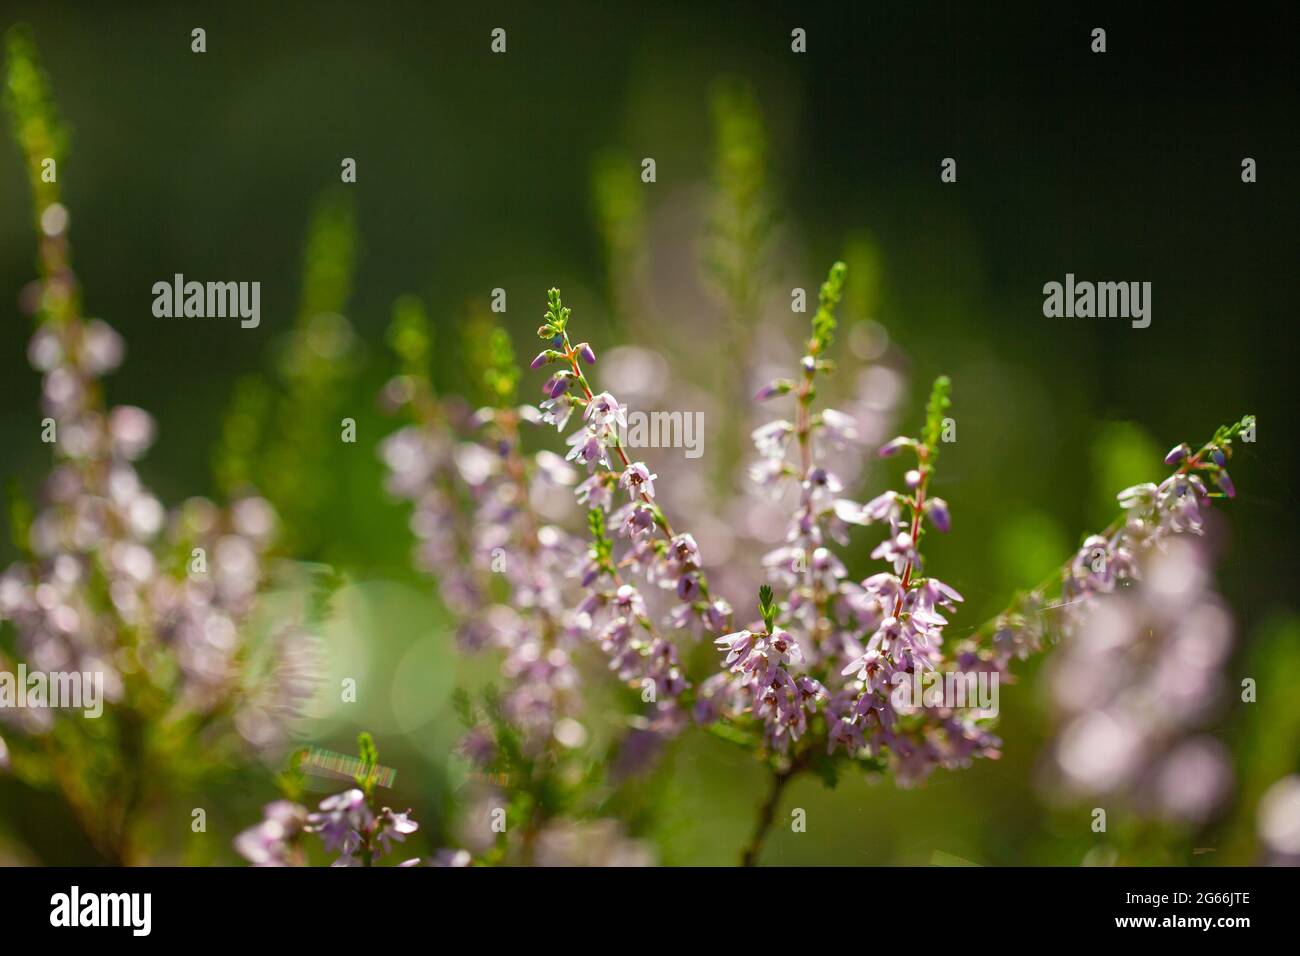 Blooming wild purple common heather Calluna vulgaris. Nature floral blossom flowers background Stock Photo